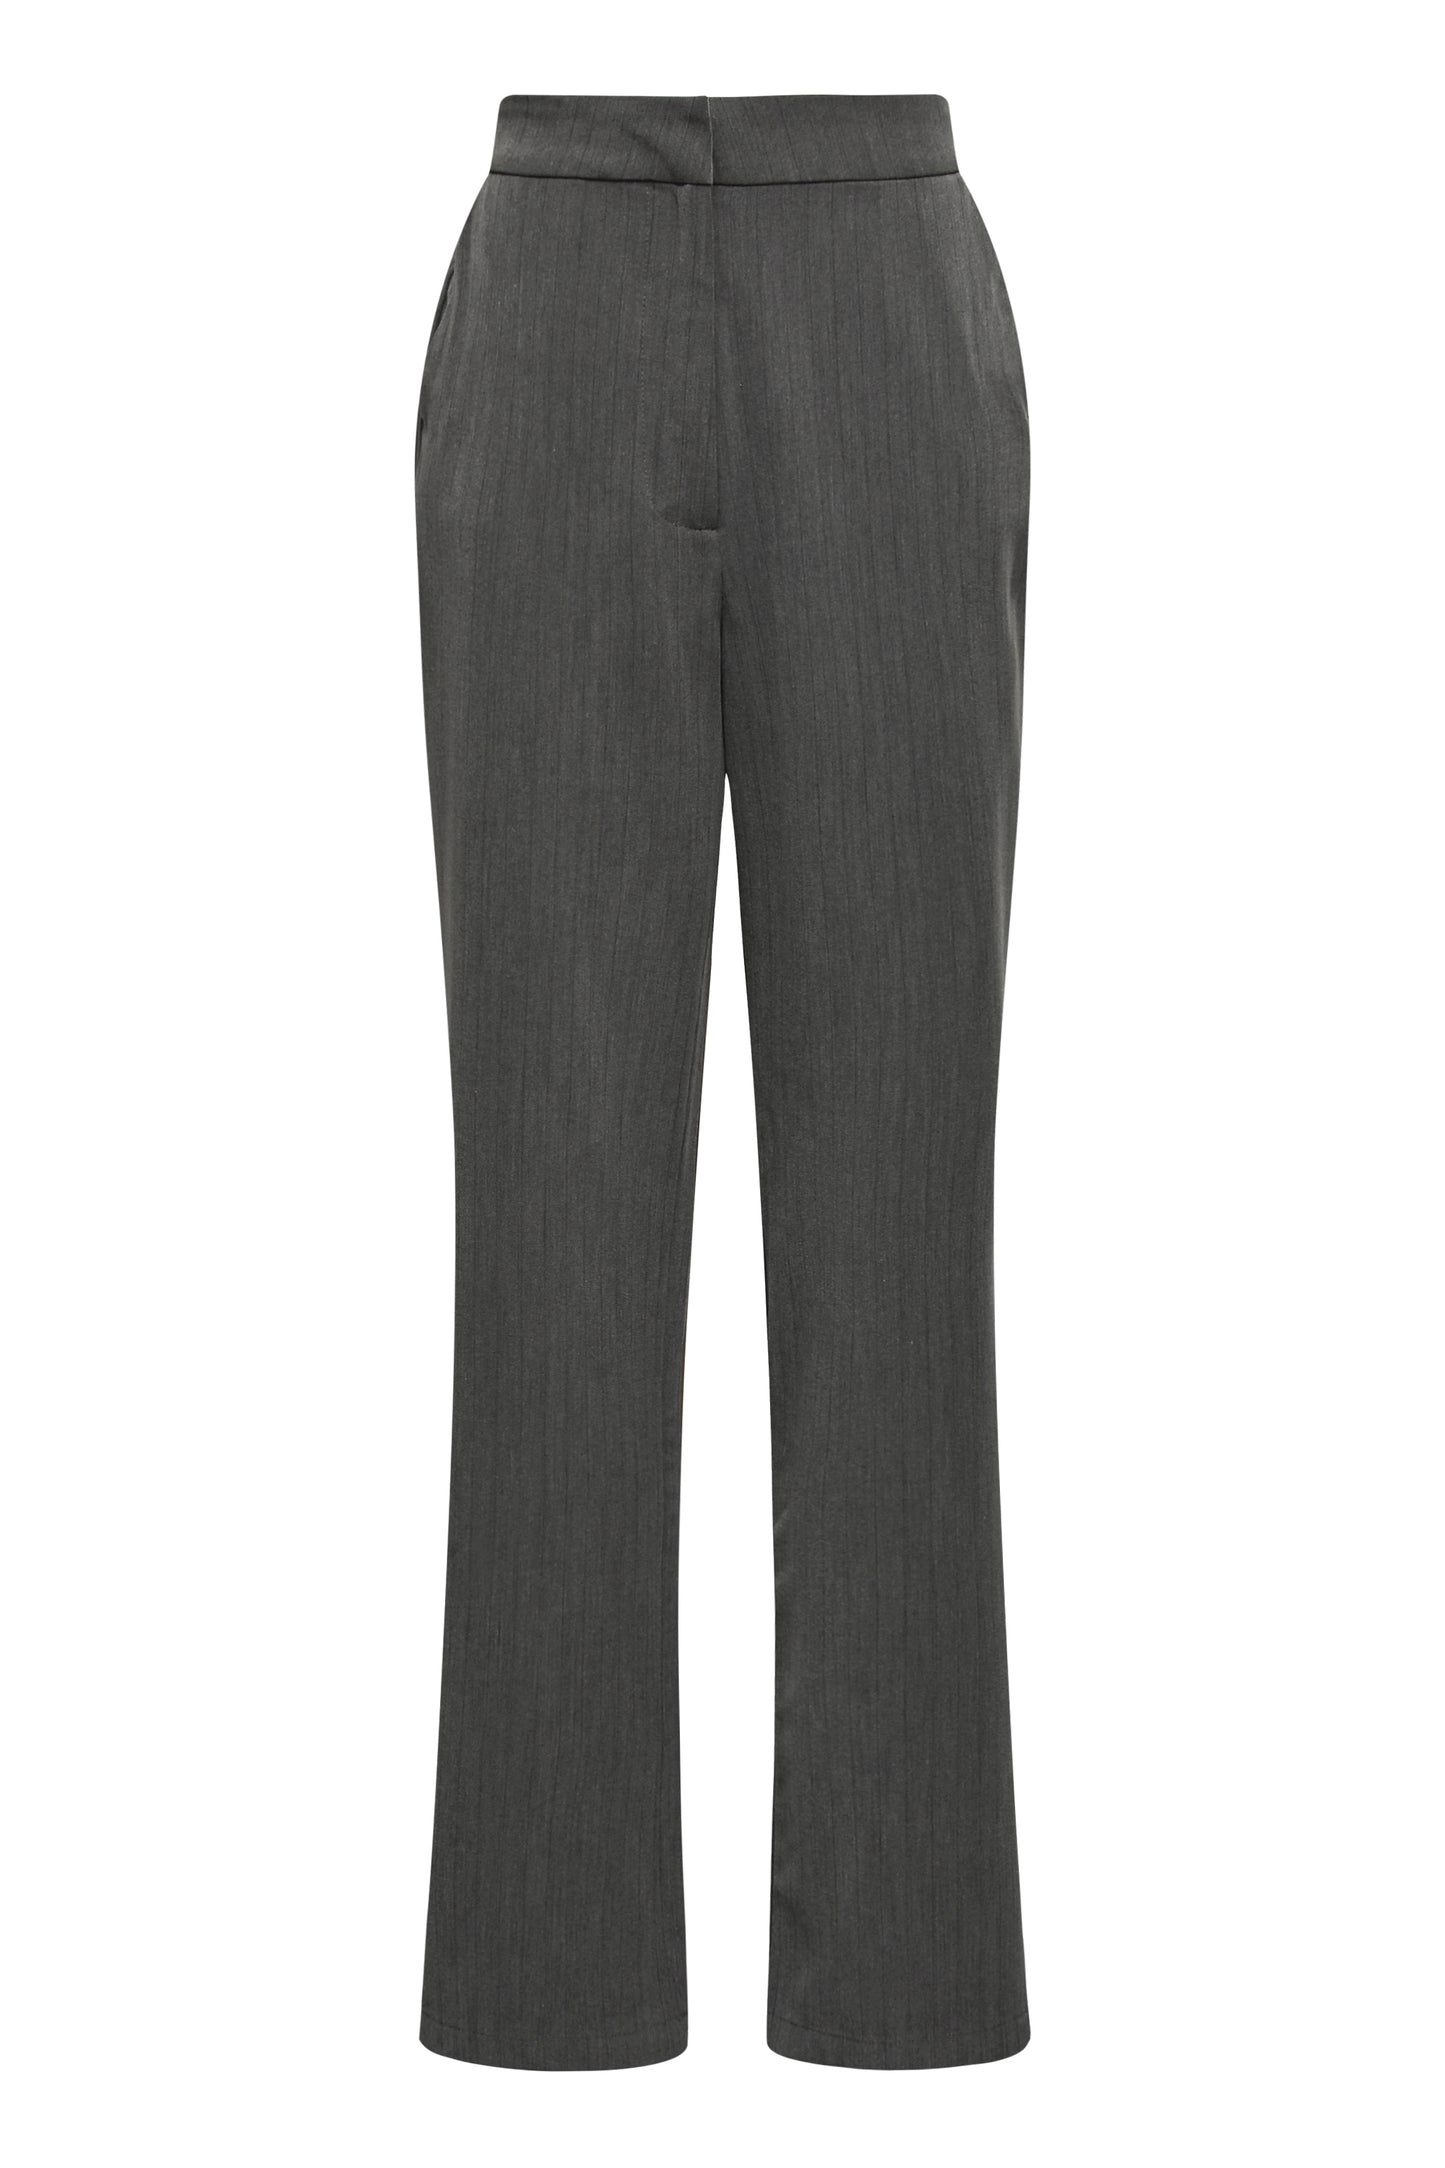 A-VIEW - Beverly stripe pants - Grå